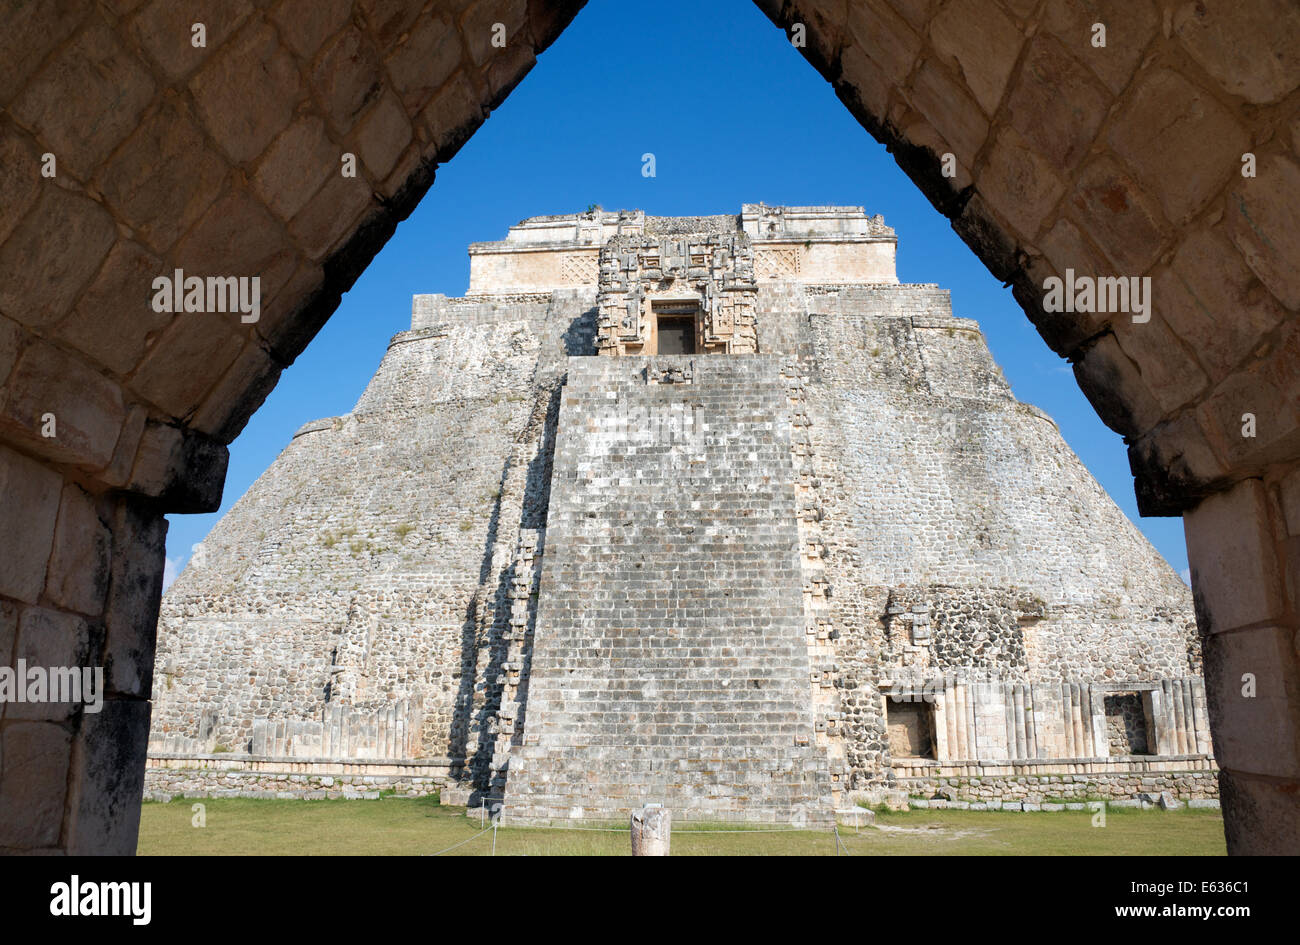 Pyramid of the Magician Uxmal Yucatan Mexico Stock Photo